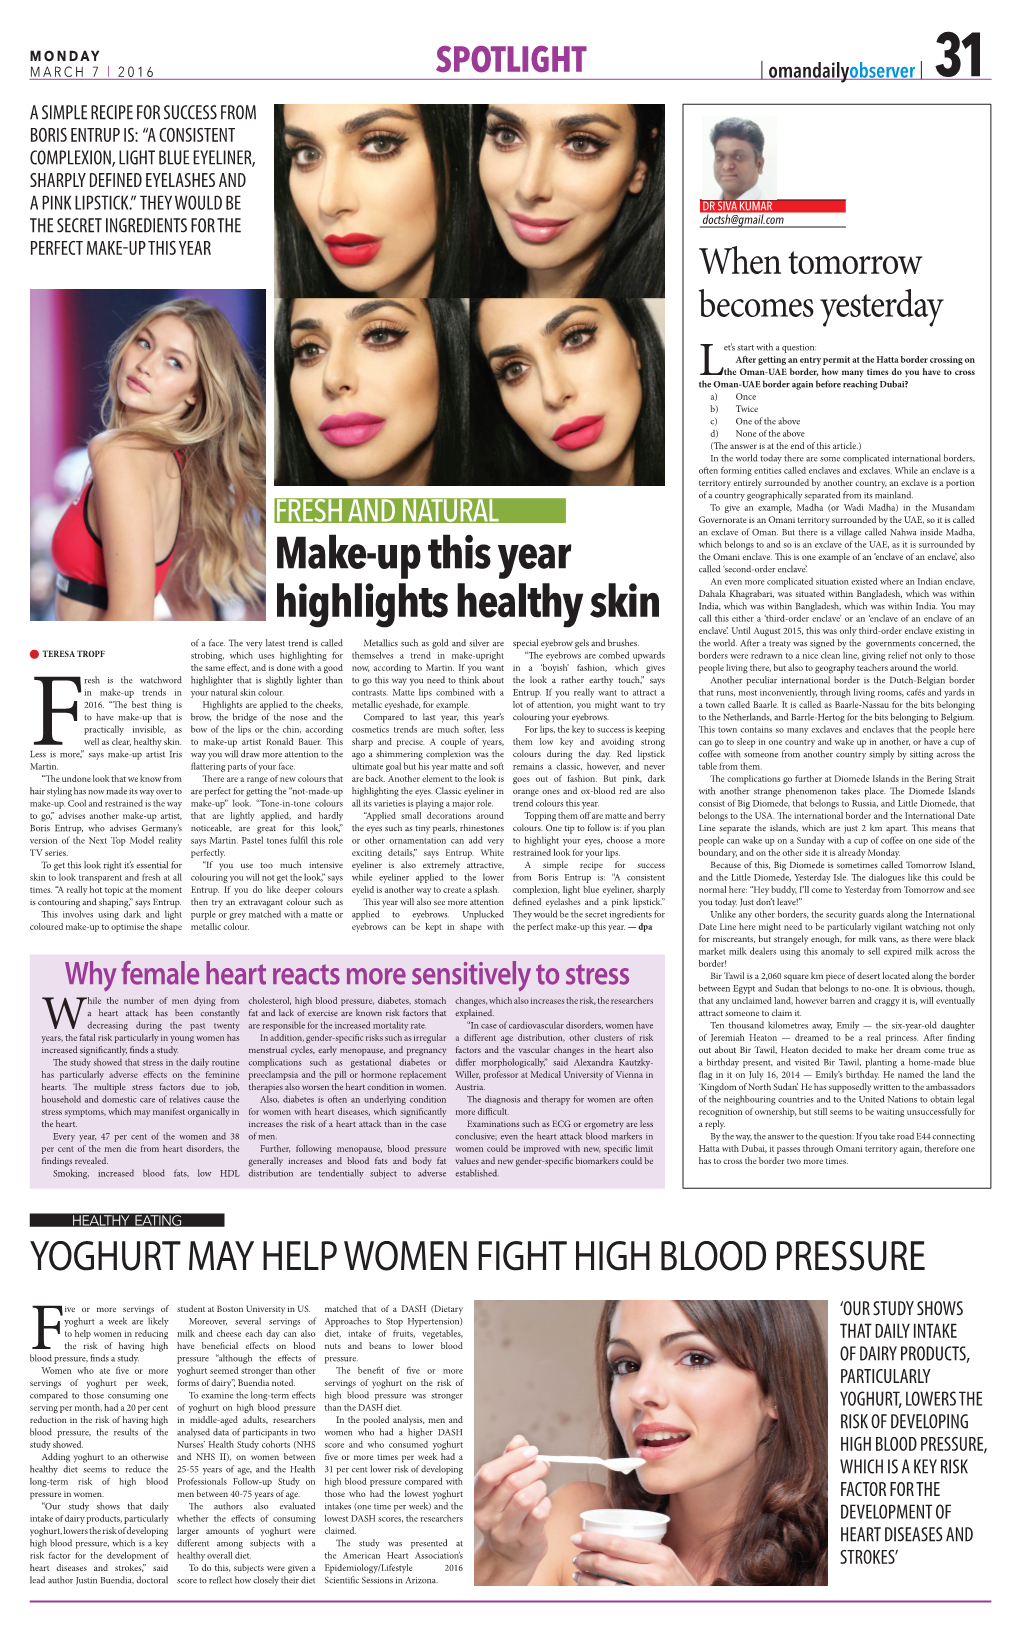 Make-Up This Year Highlights Healthy Skin